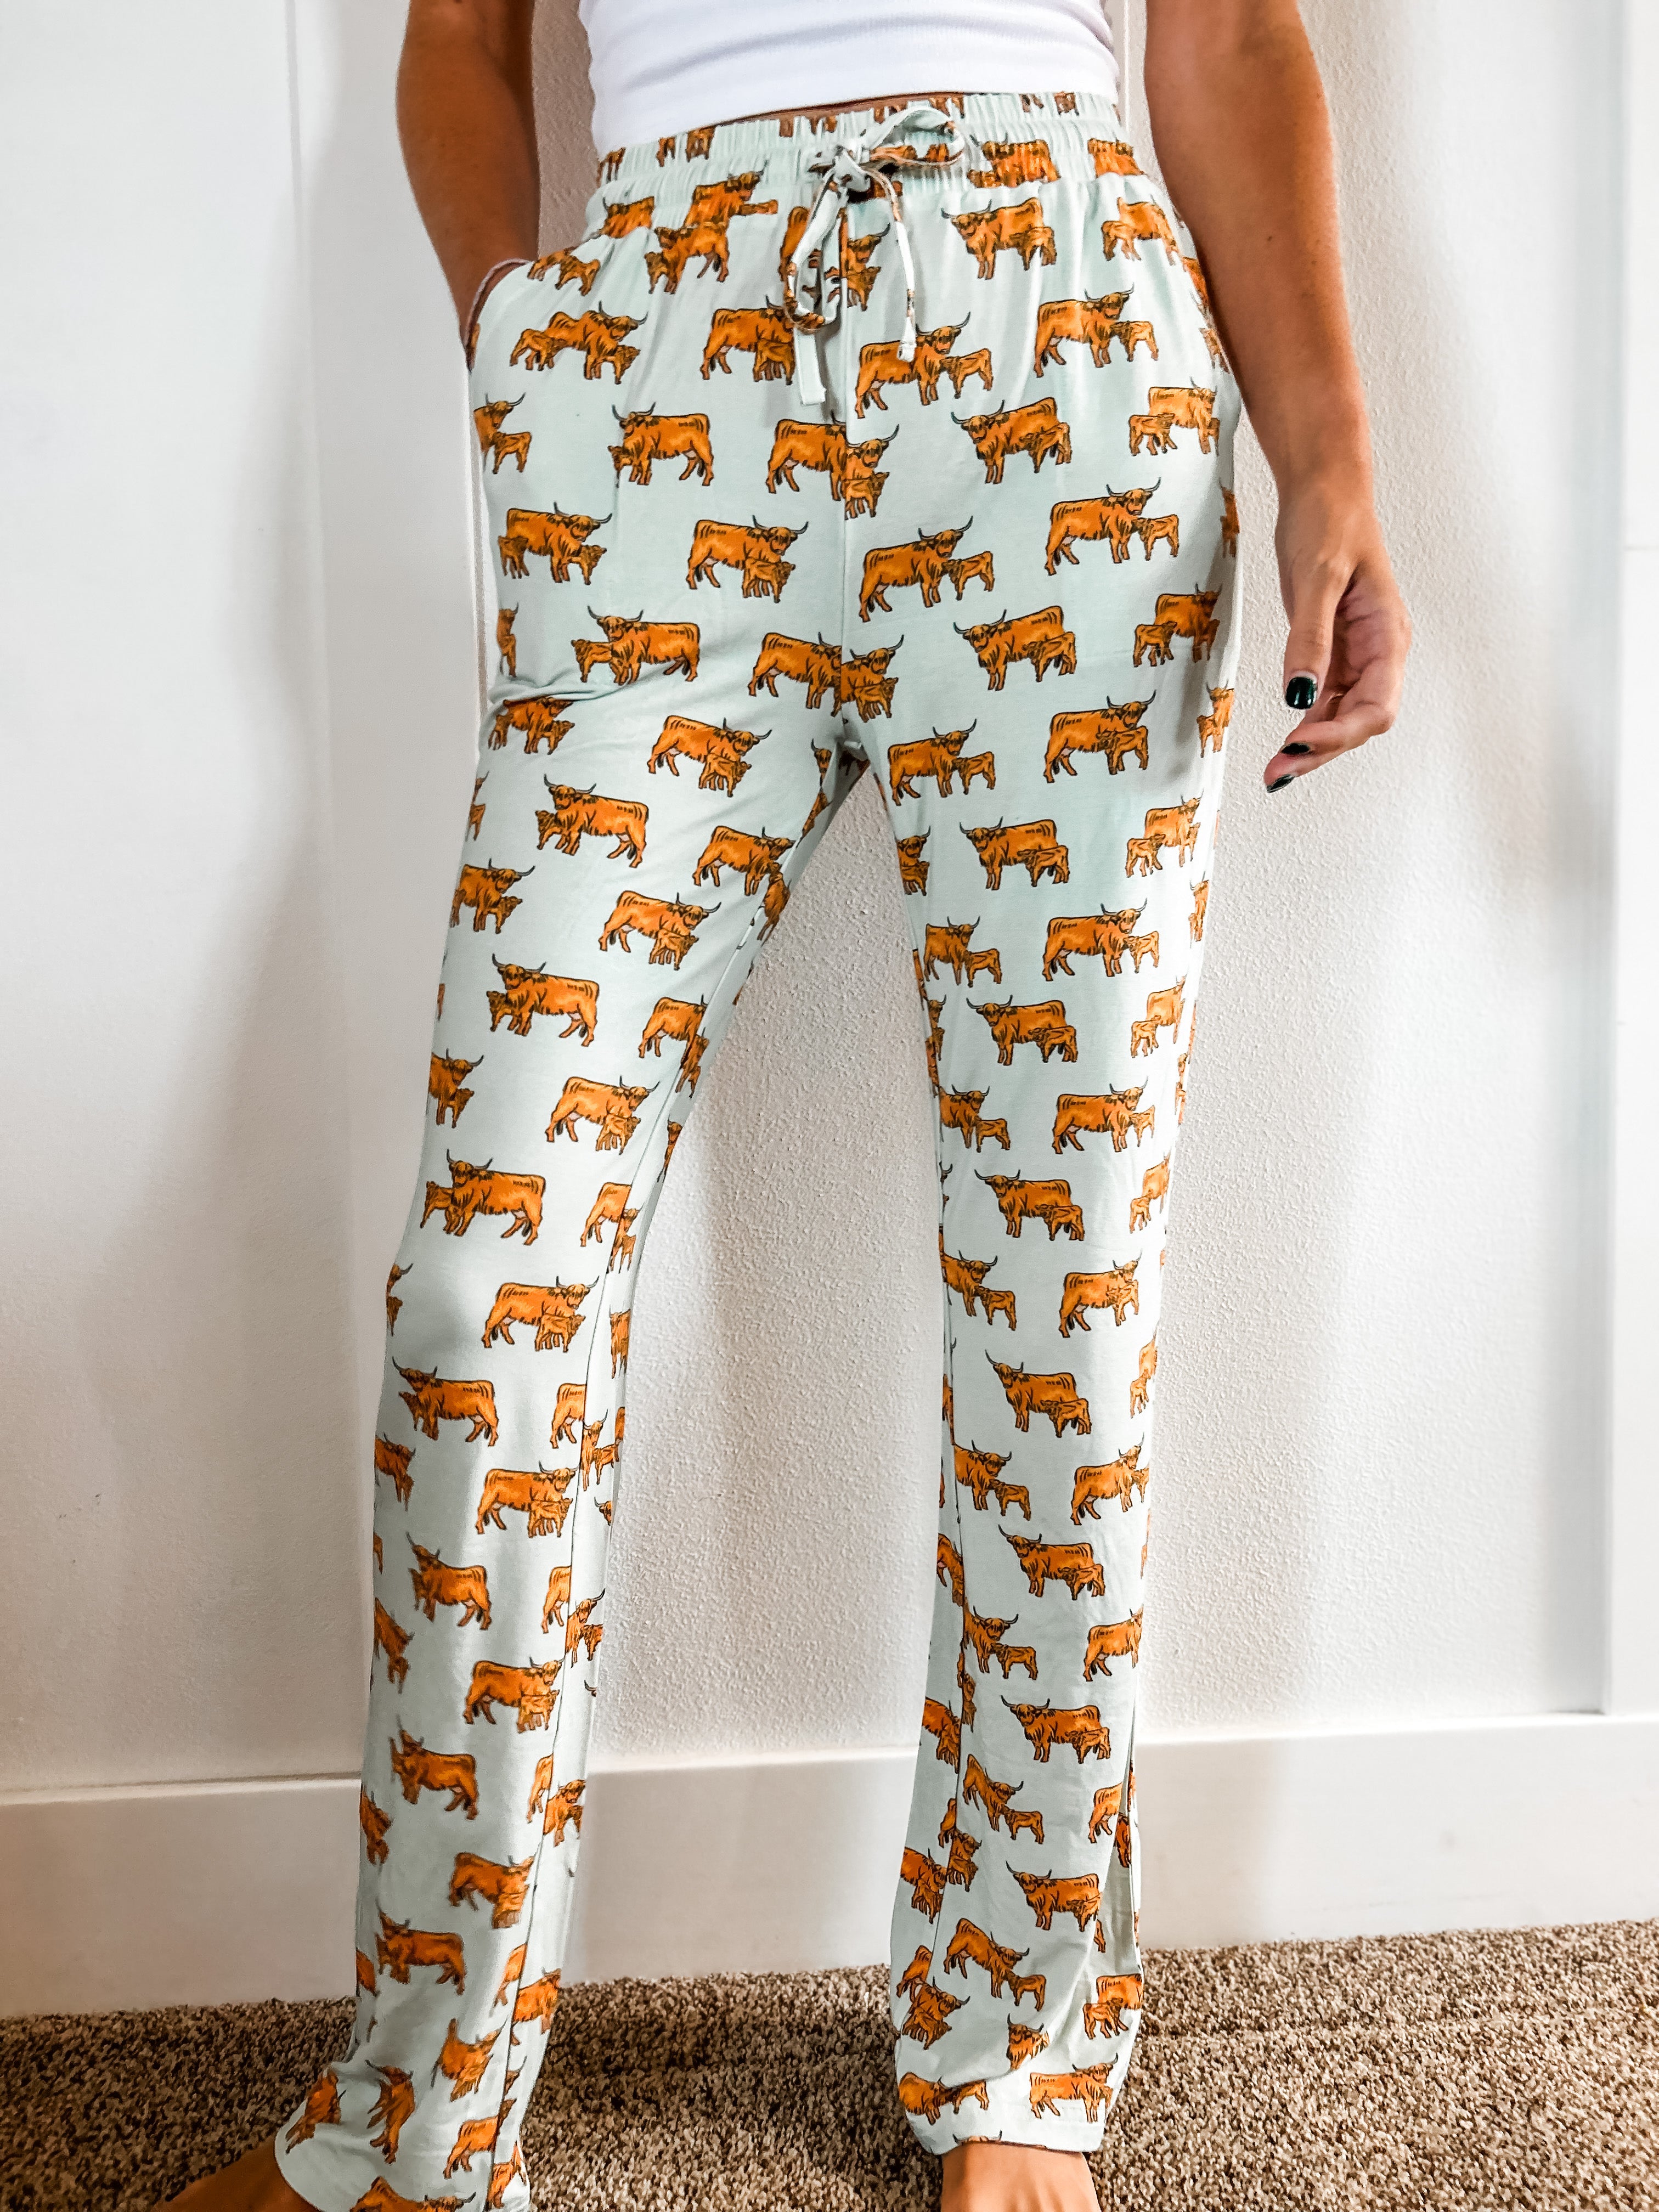 Highland Cattle Adult Pajamas Pants